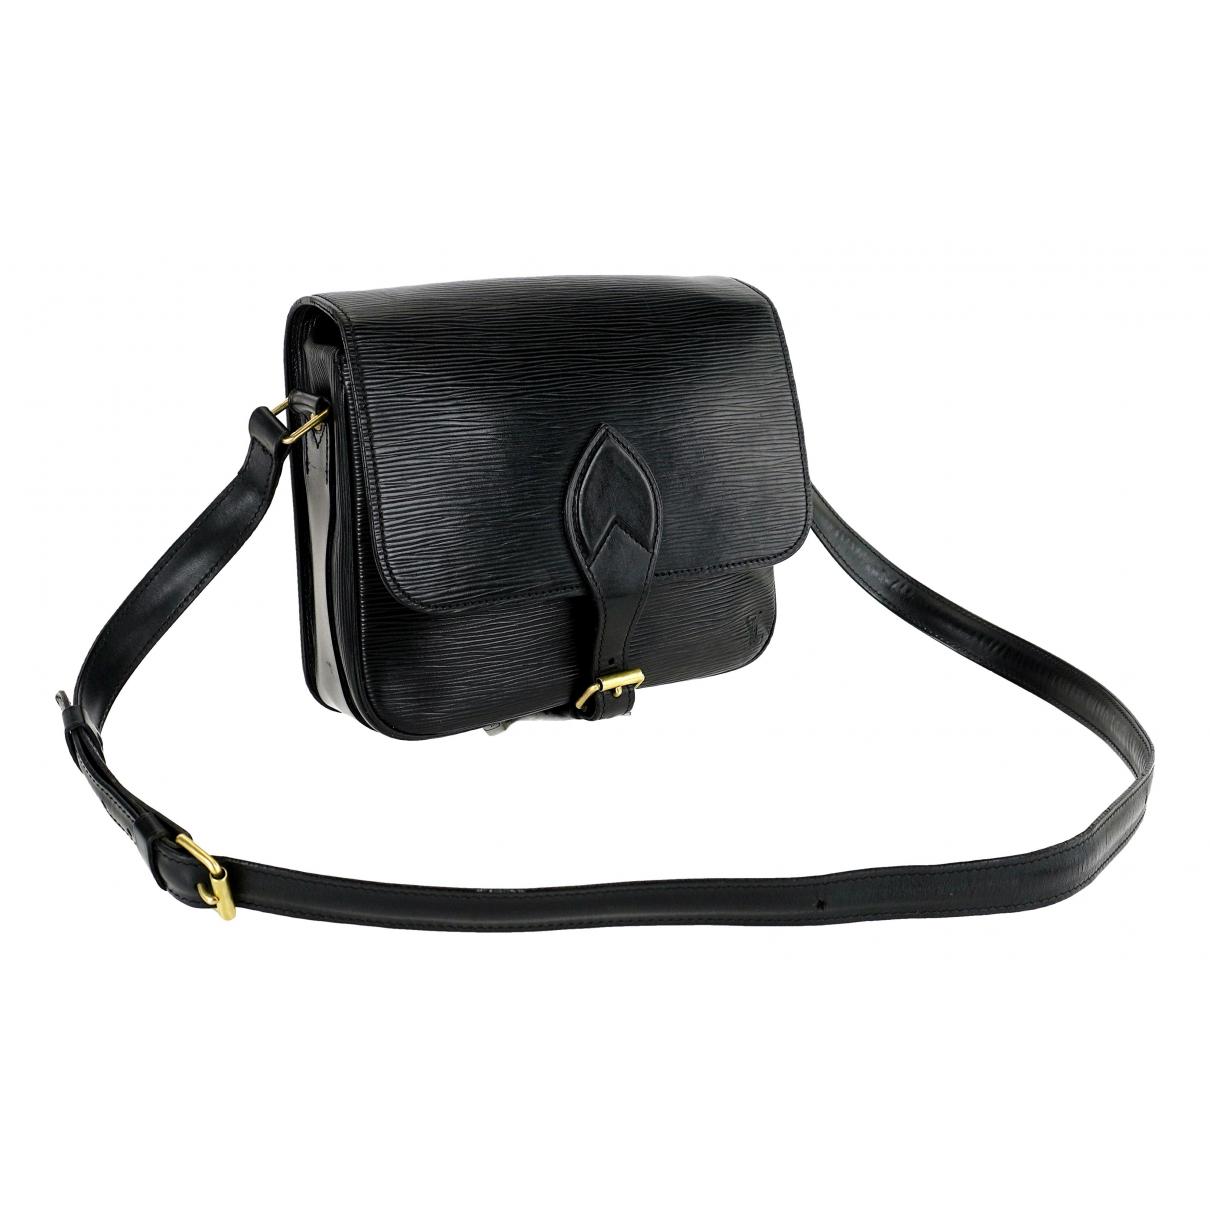 Black Louis Vuitton Purses - 1,144 For Sale on 1stDibs  black louis vuitton  bag, louis vuitton purses on sale, lv purses